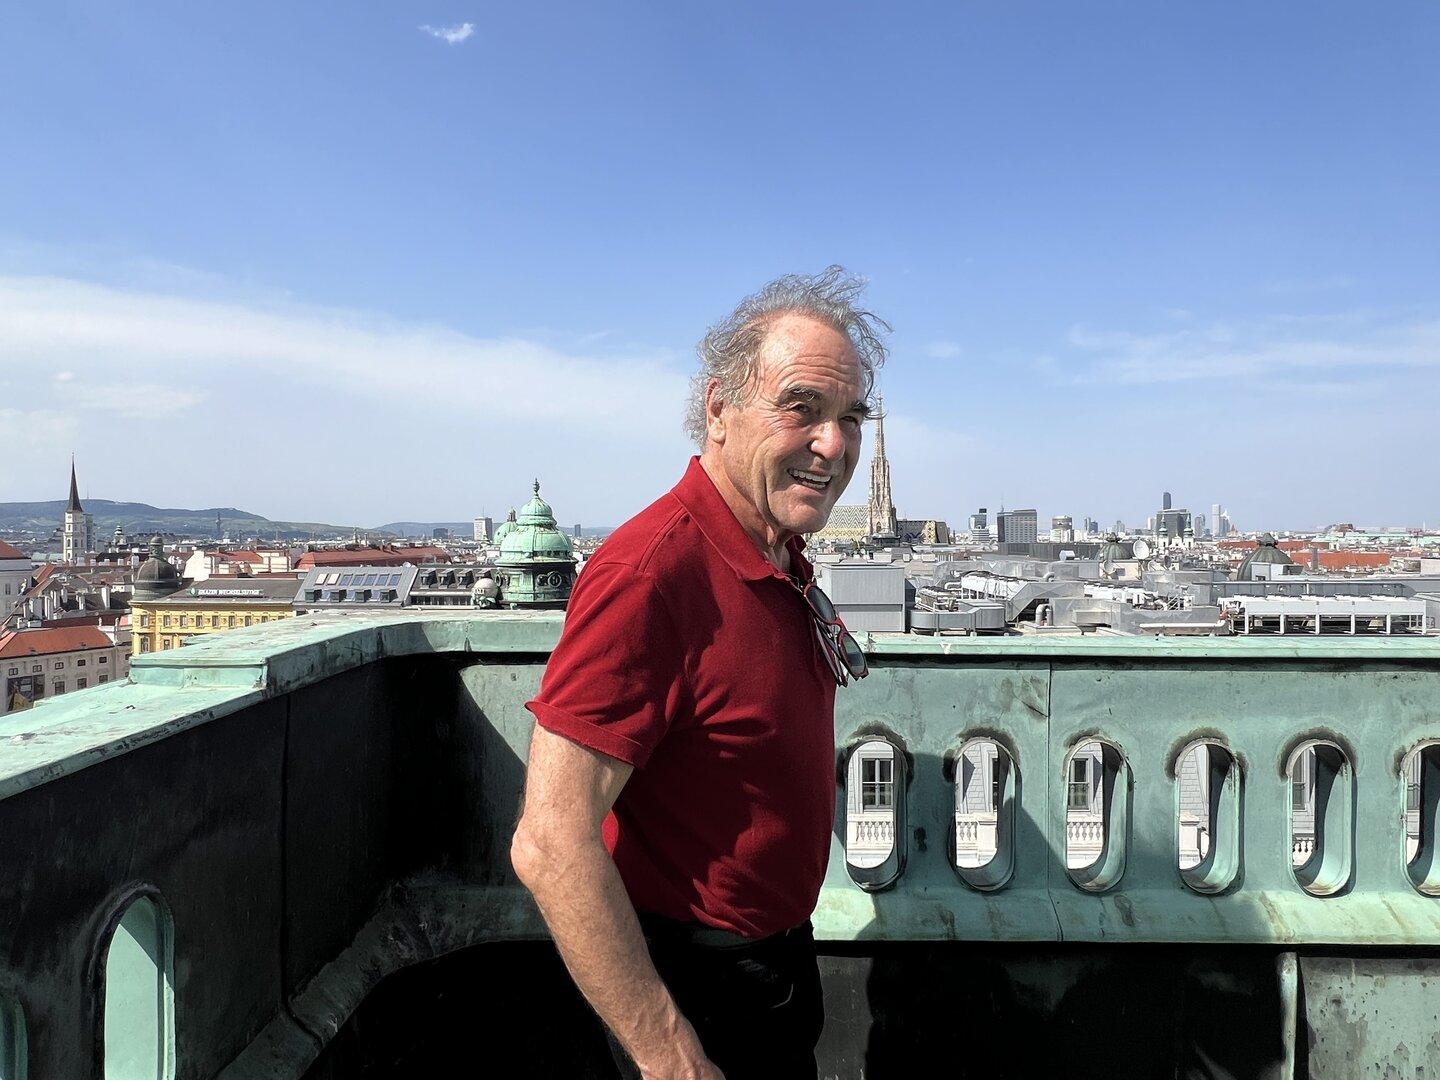 Staatsoper, Falco und Heurigen: Star-Regisseur Oliver Stone war in Wien unterwegs